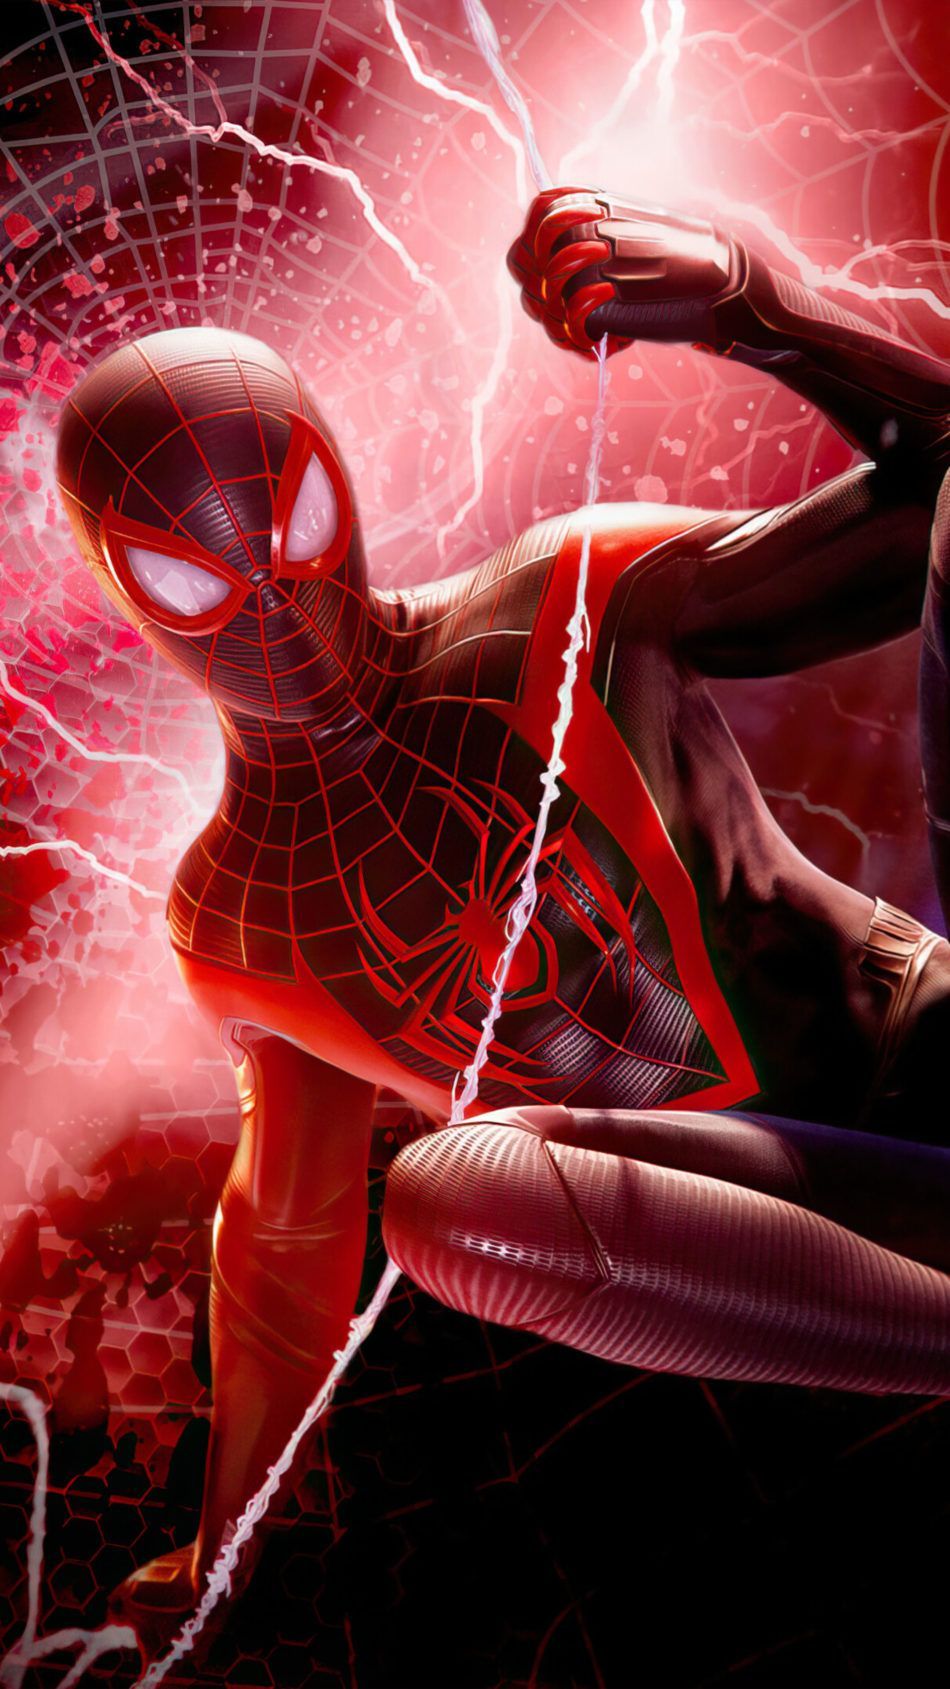 Spider Man Miles Morales Game Action 4K Ultra HD Mobile Wallpaper. Miles Morales Spiderman, Spiderman, Star Wars Image